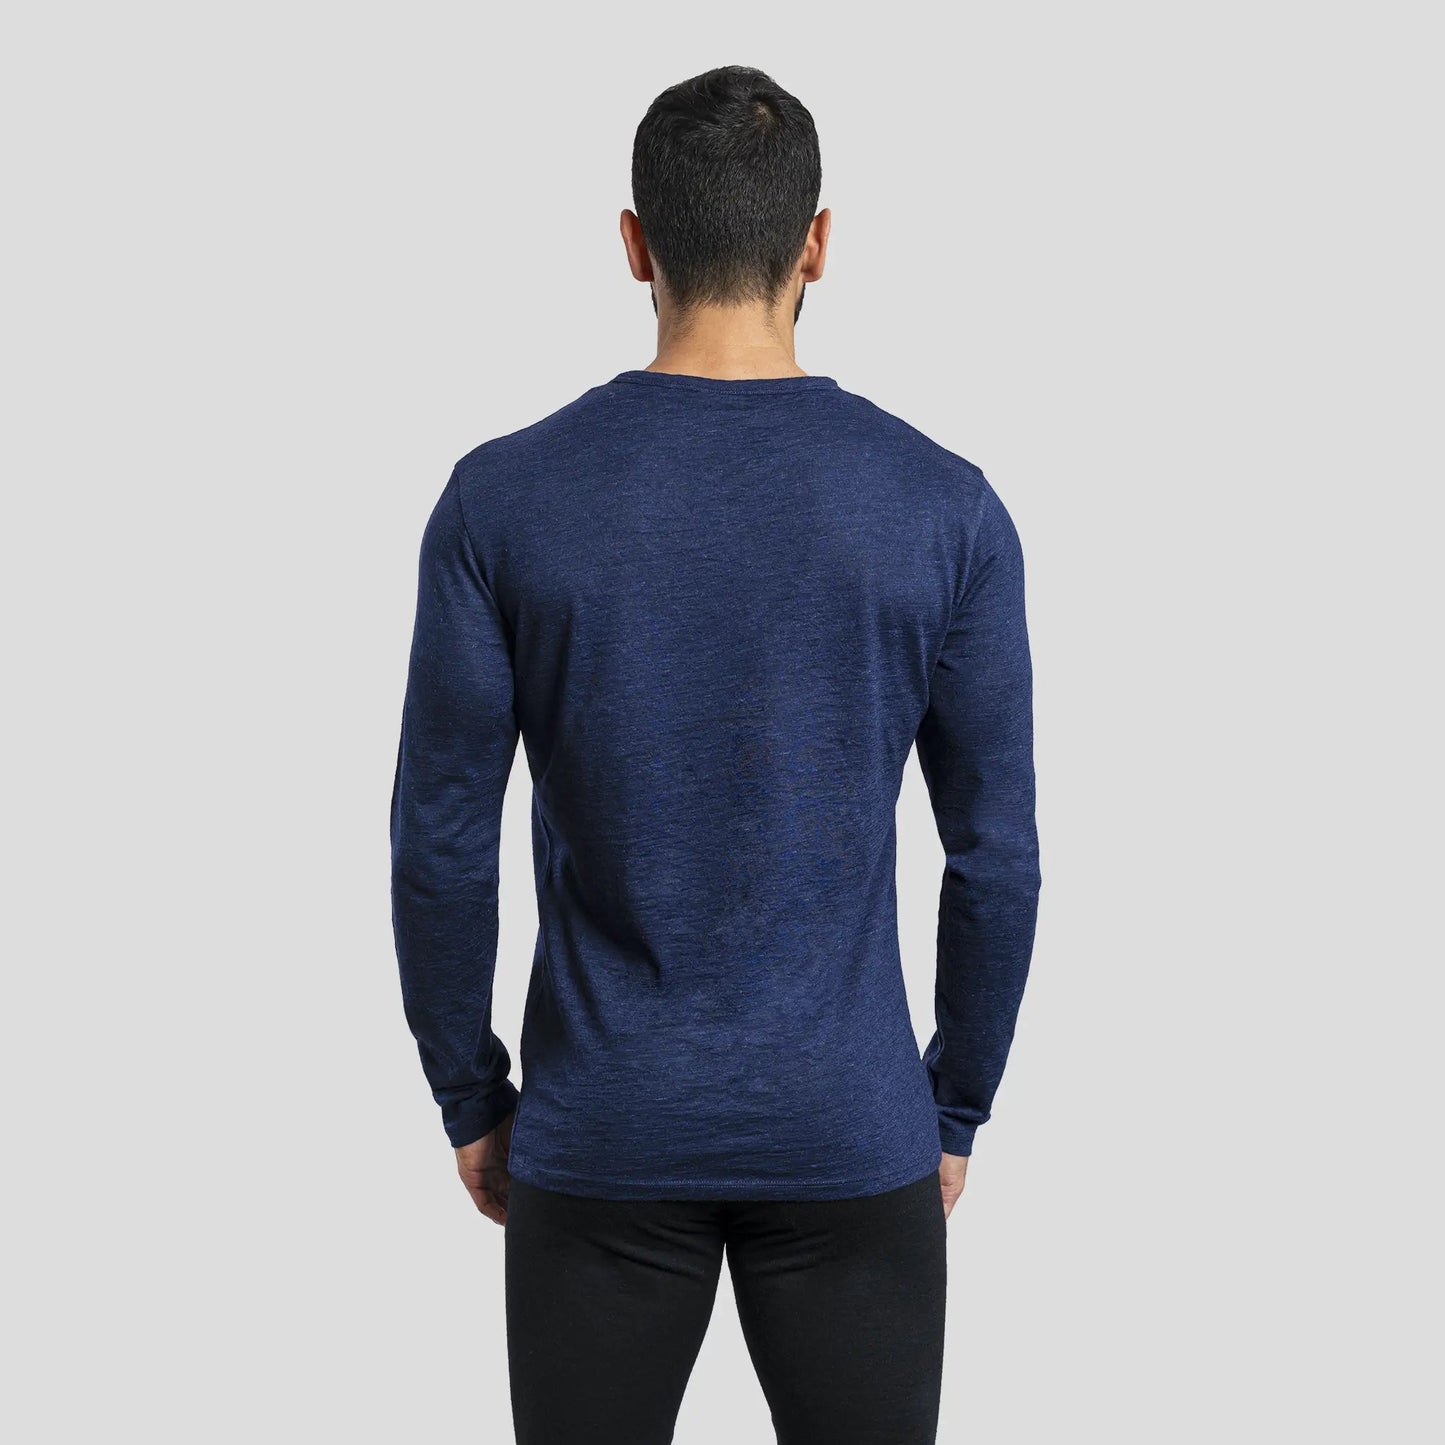 Men's Alpaca Wool Long Sleeve Base Layer: 110 Ultralight color Navy Blue